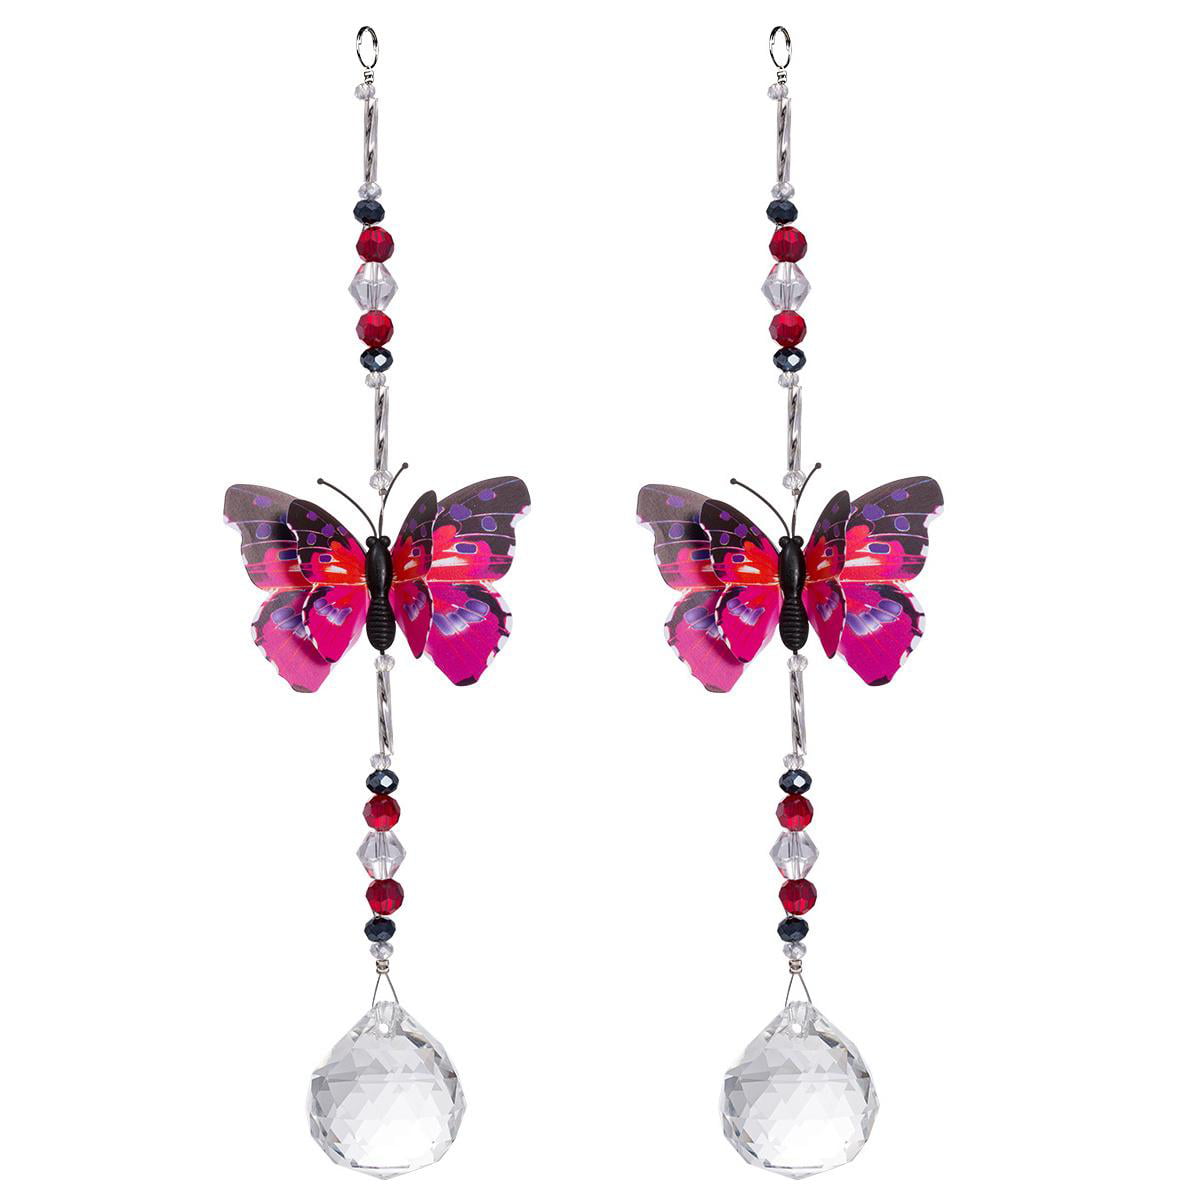 Handmade Rainbow Crystal Beads Prisms Suncatcher Rearview Mirror Hanging Pendant 